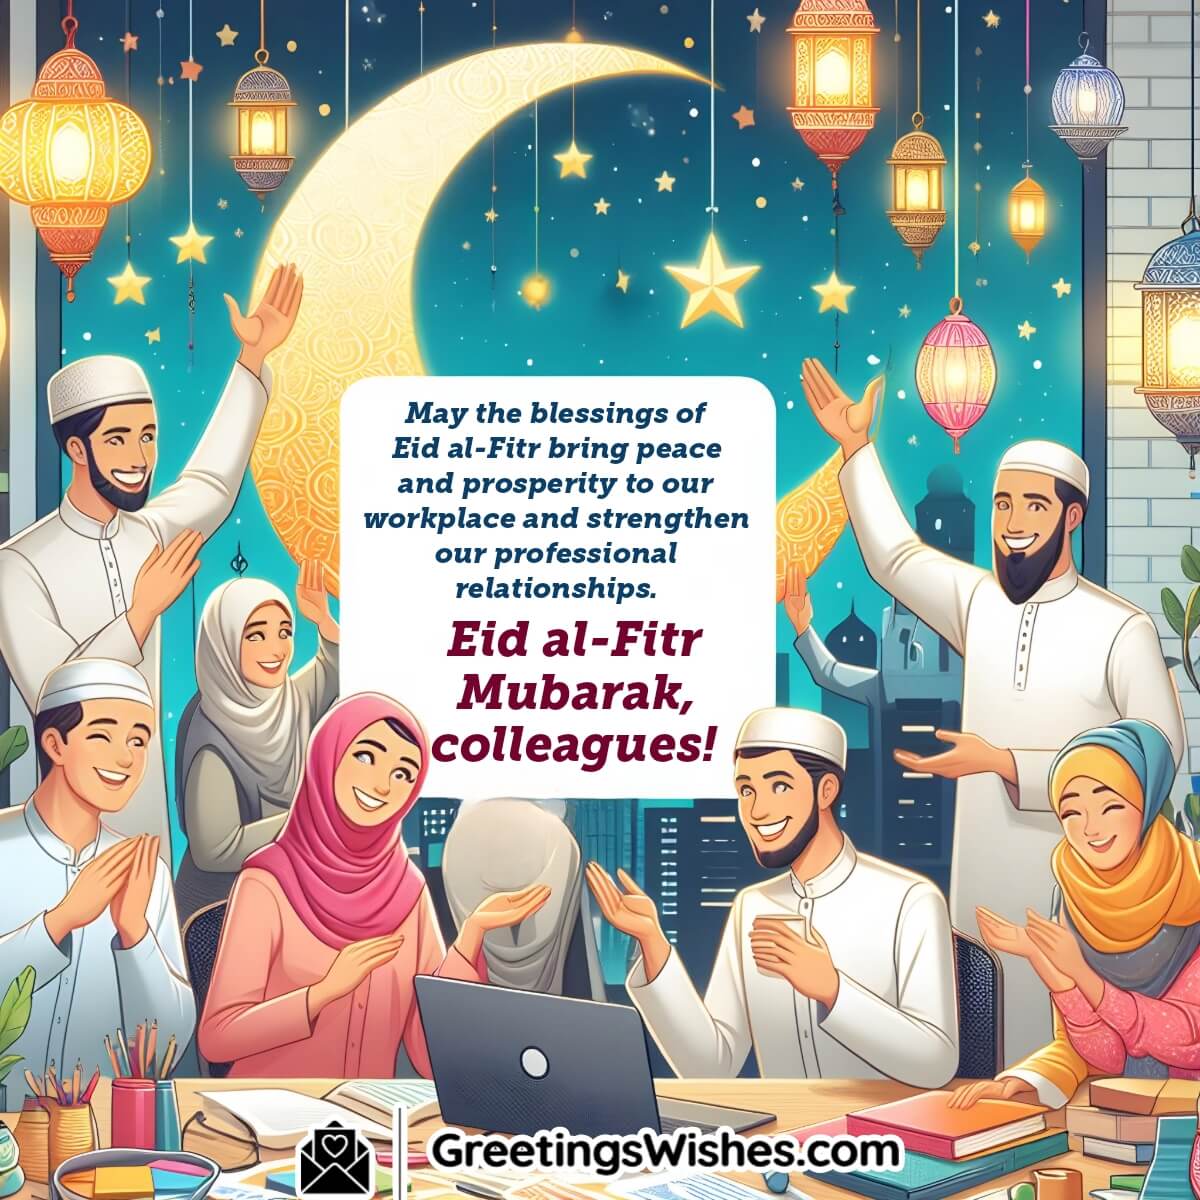 Eid Al Fitr Mubarak Colleagues!